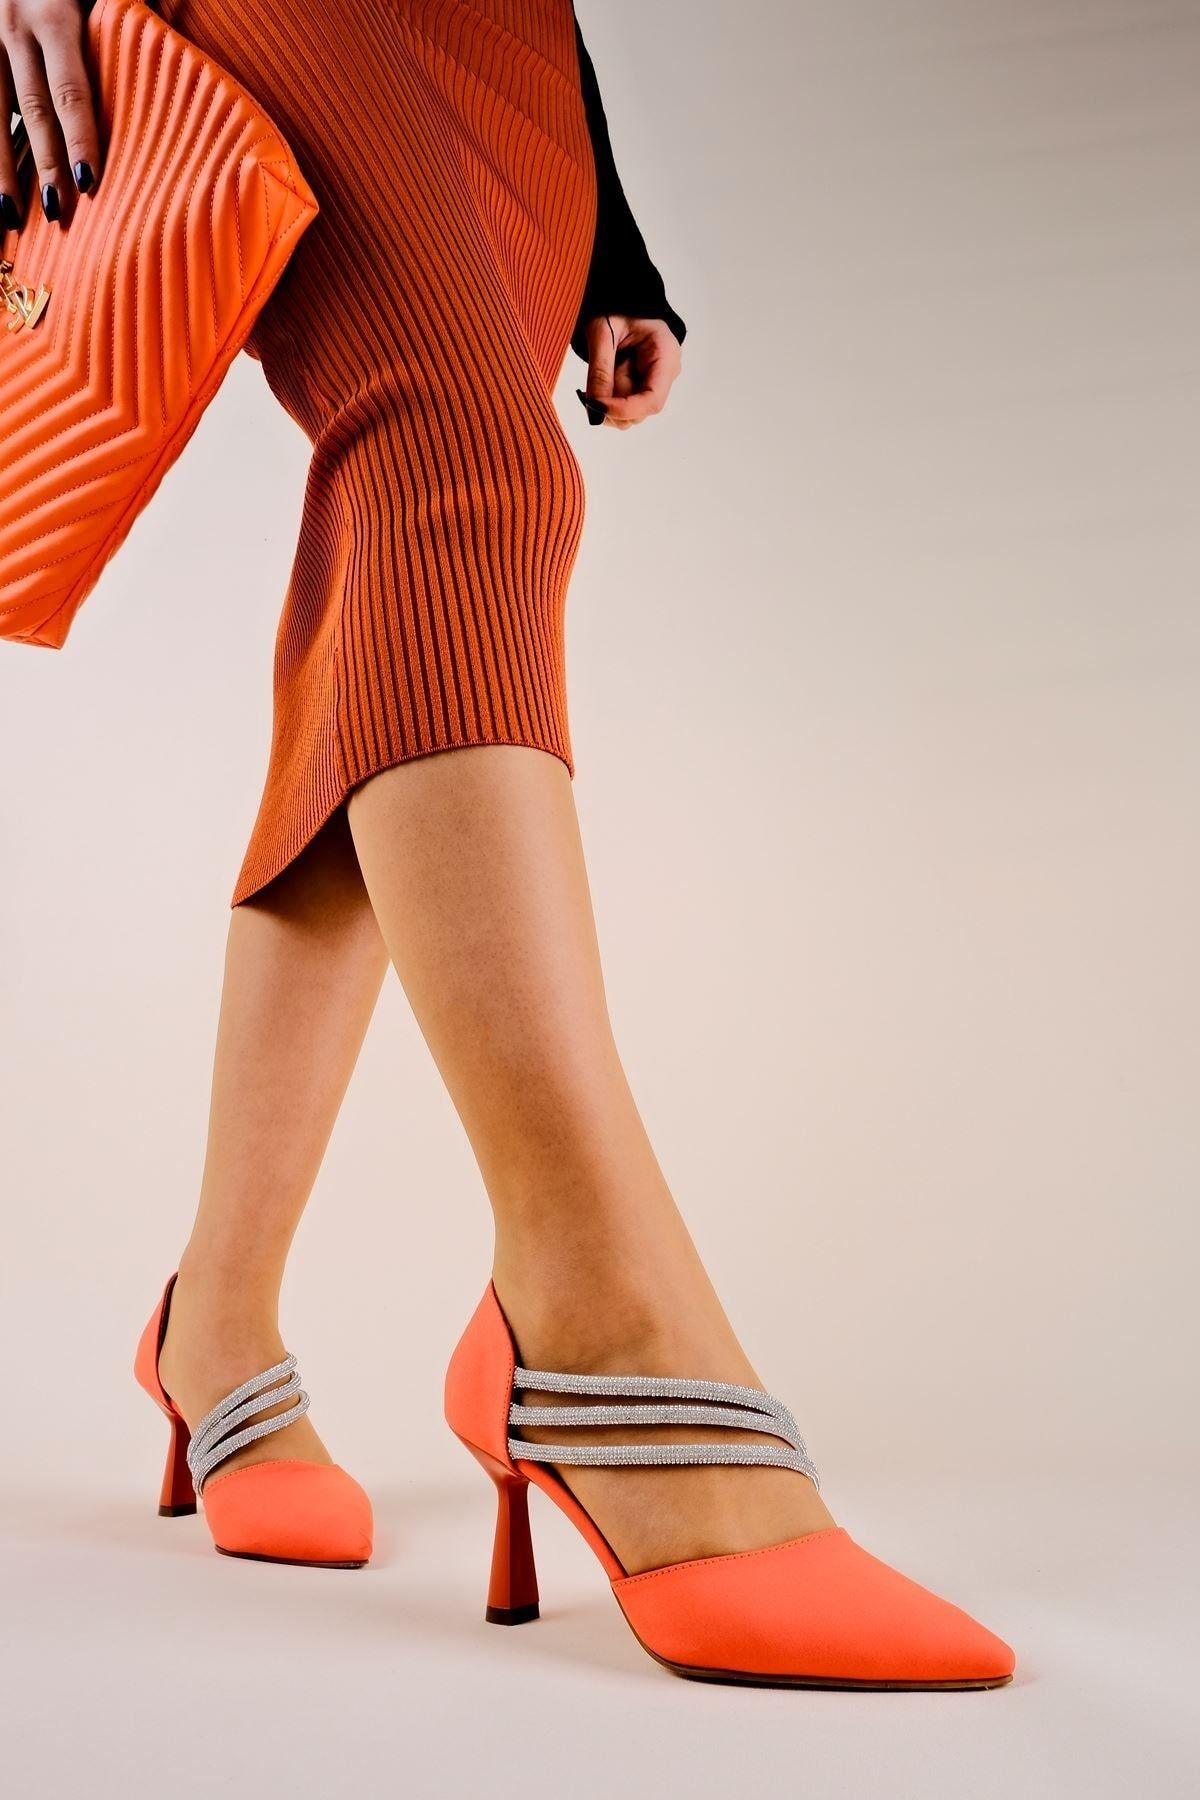 LAL SHOES & BAGS Tara Kadın Topuklu Ayakkabı Çapraz Taş Geçişli